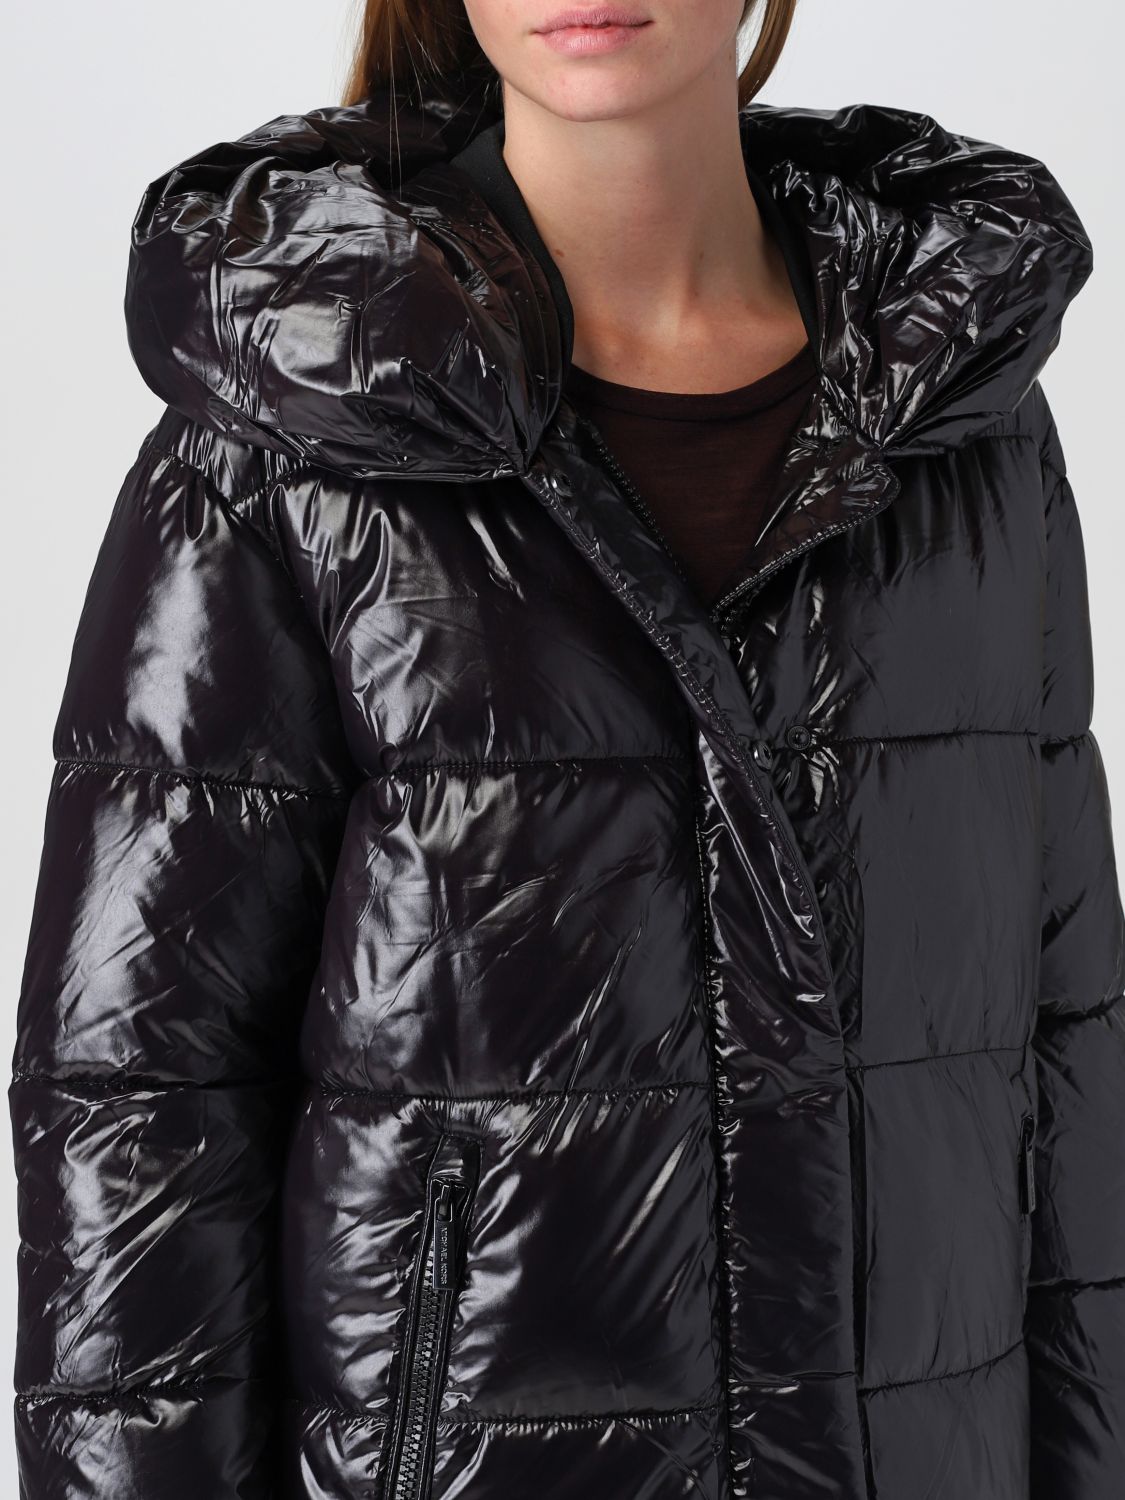 MICHAEL KORS: jacket for woman - Black | Michael Kors jacket 77Q5805M42  online on 